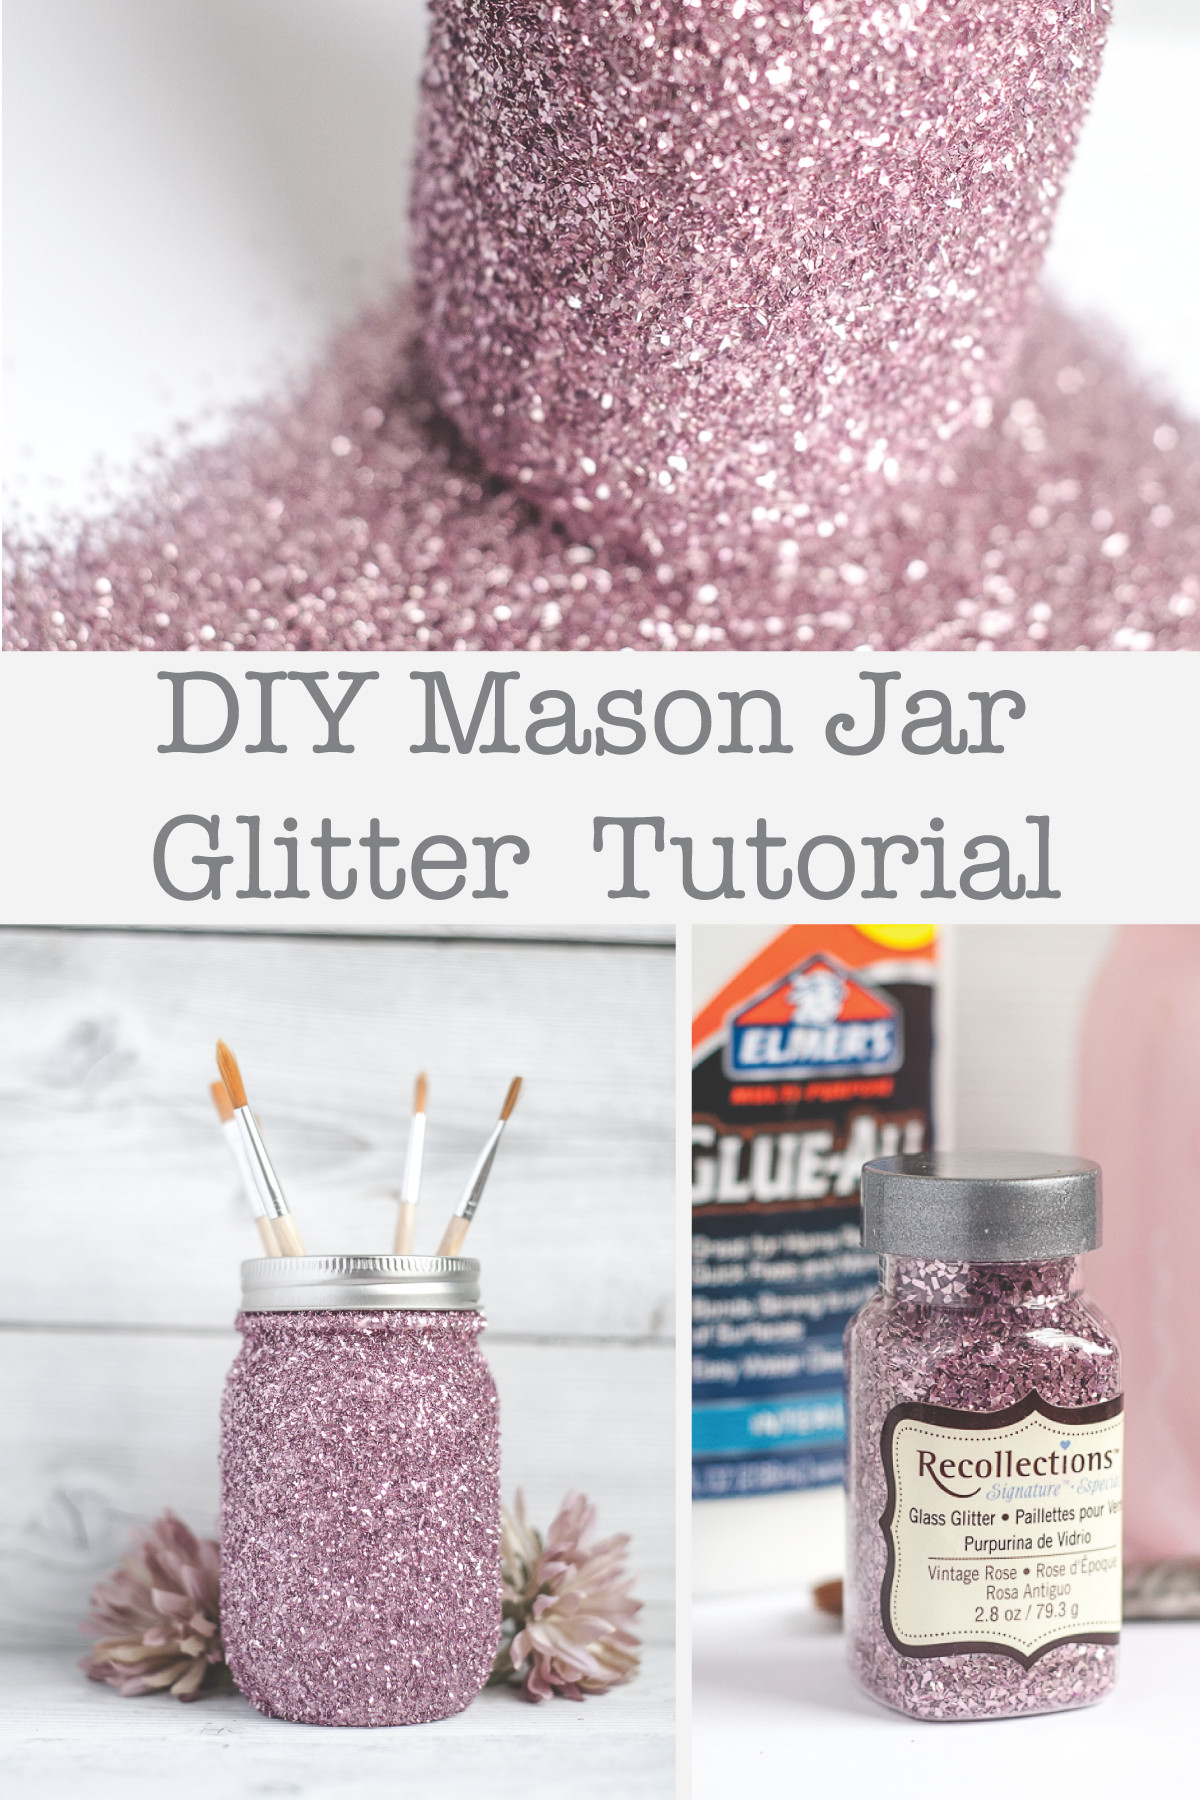 Best ideas about DIY Mason Jar
. Save or Pin DIY Glitter Mason Jar Tutorial KA Styles Design & DIY Now.